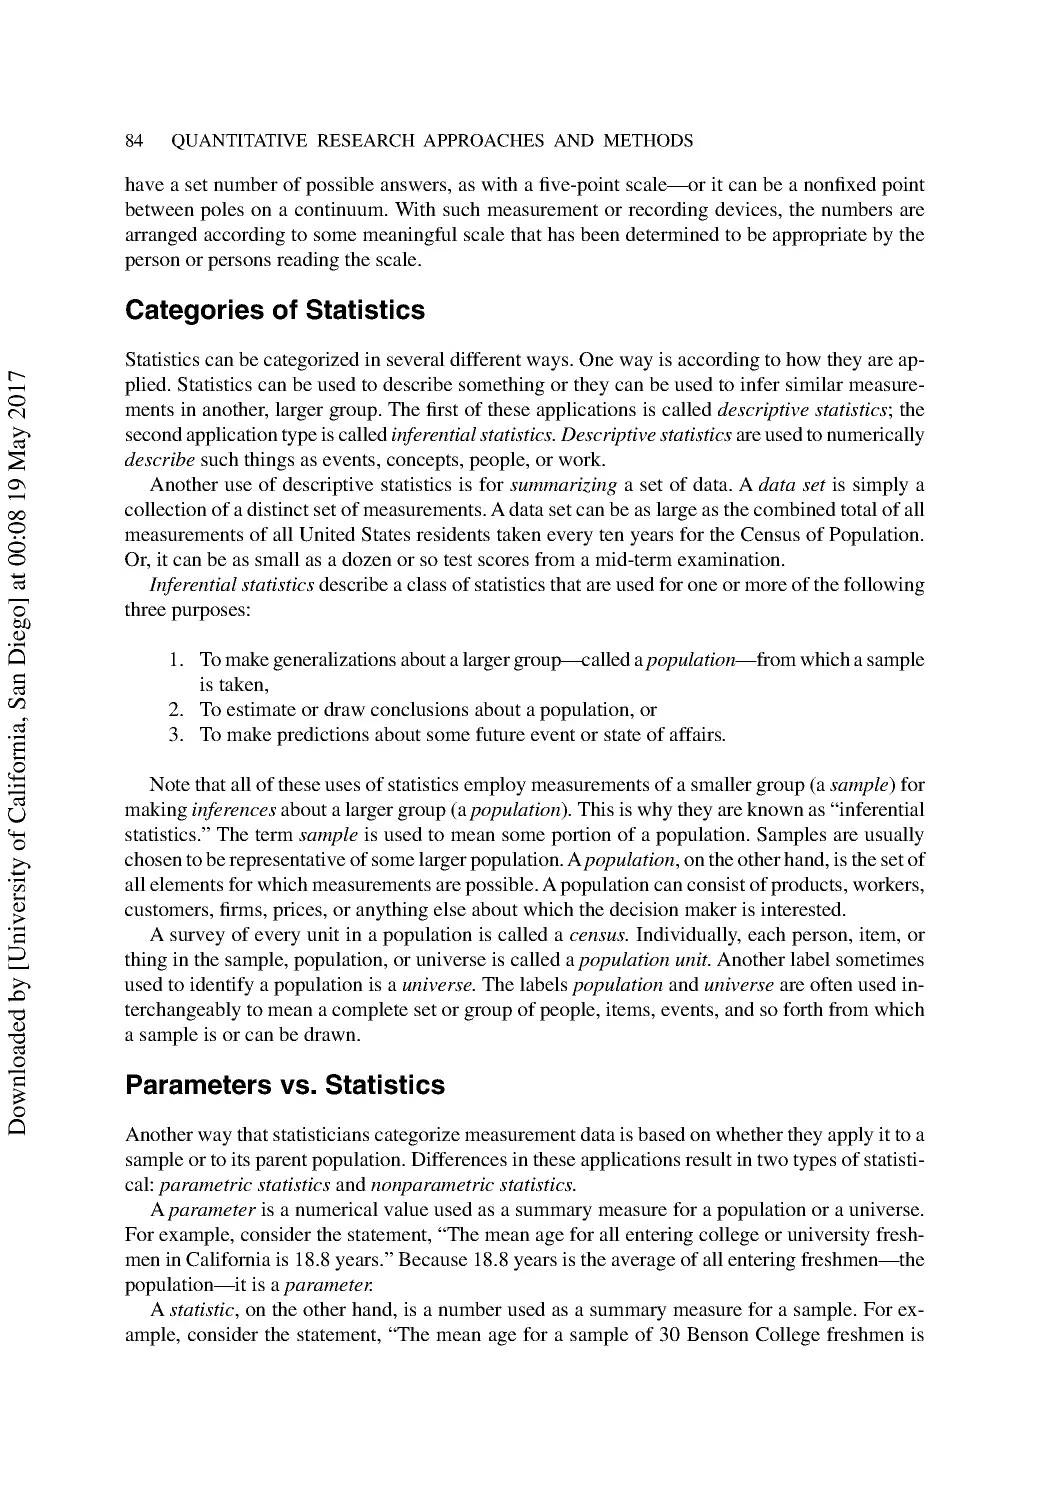 Categories of Statistics
Parameters vs. Statistics